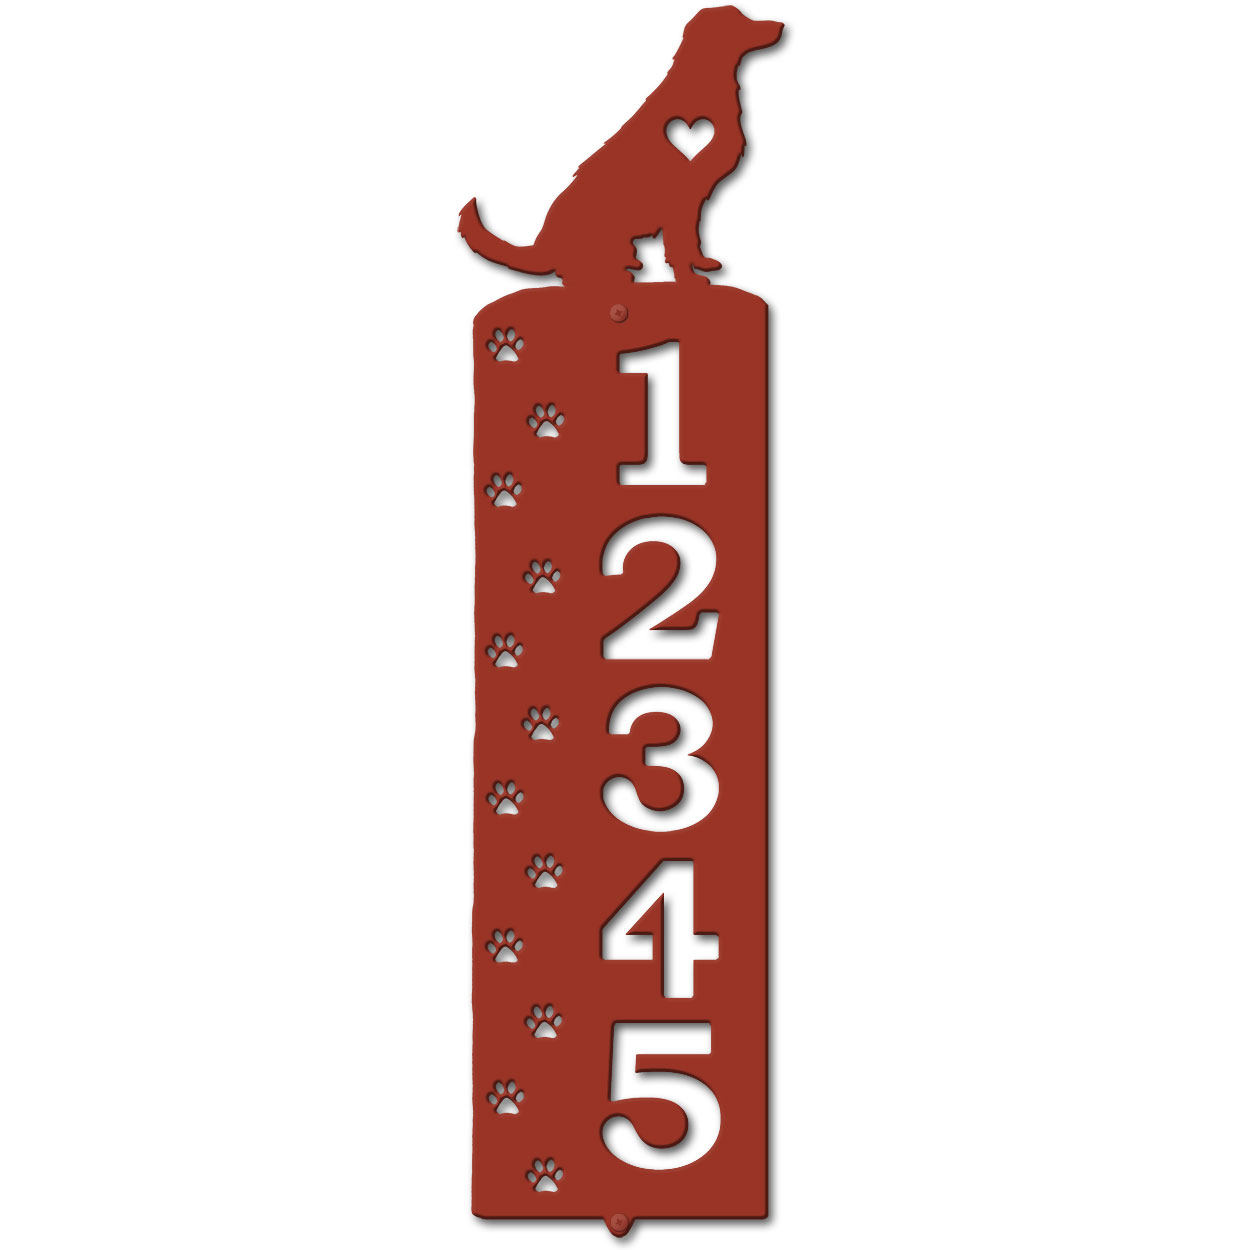 636235 - Golden Retriever Cut Outs Five Digit Address Number Plaque